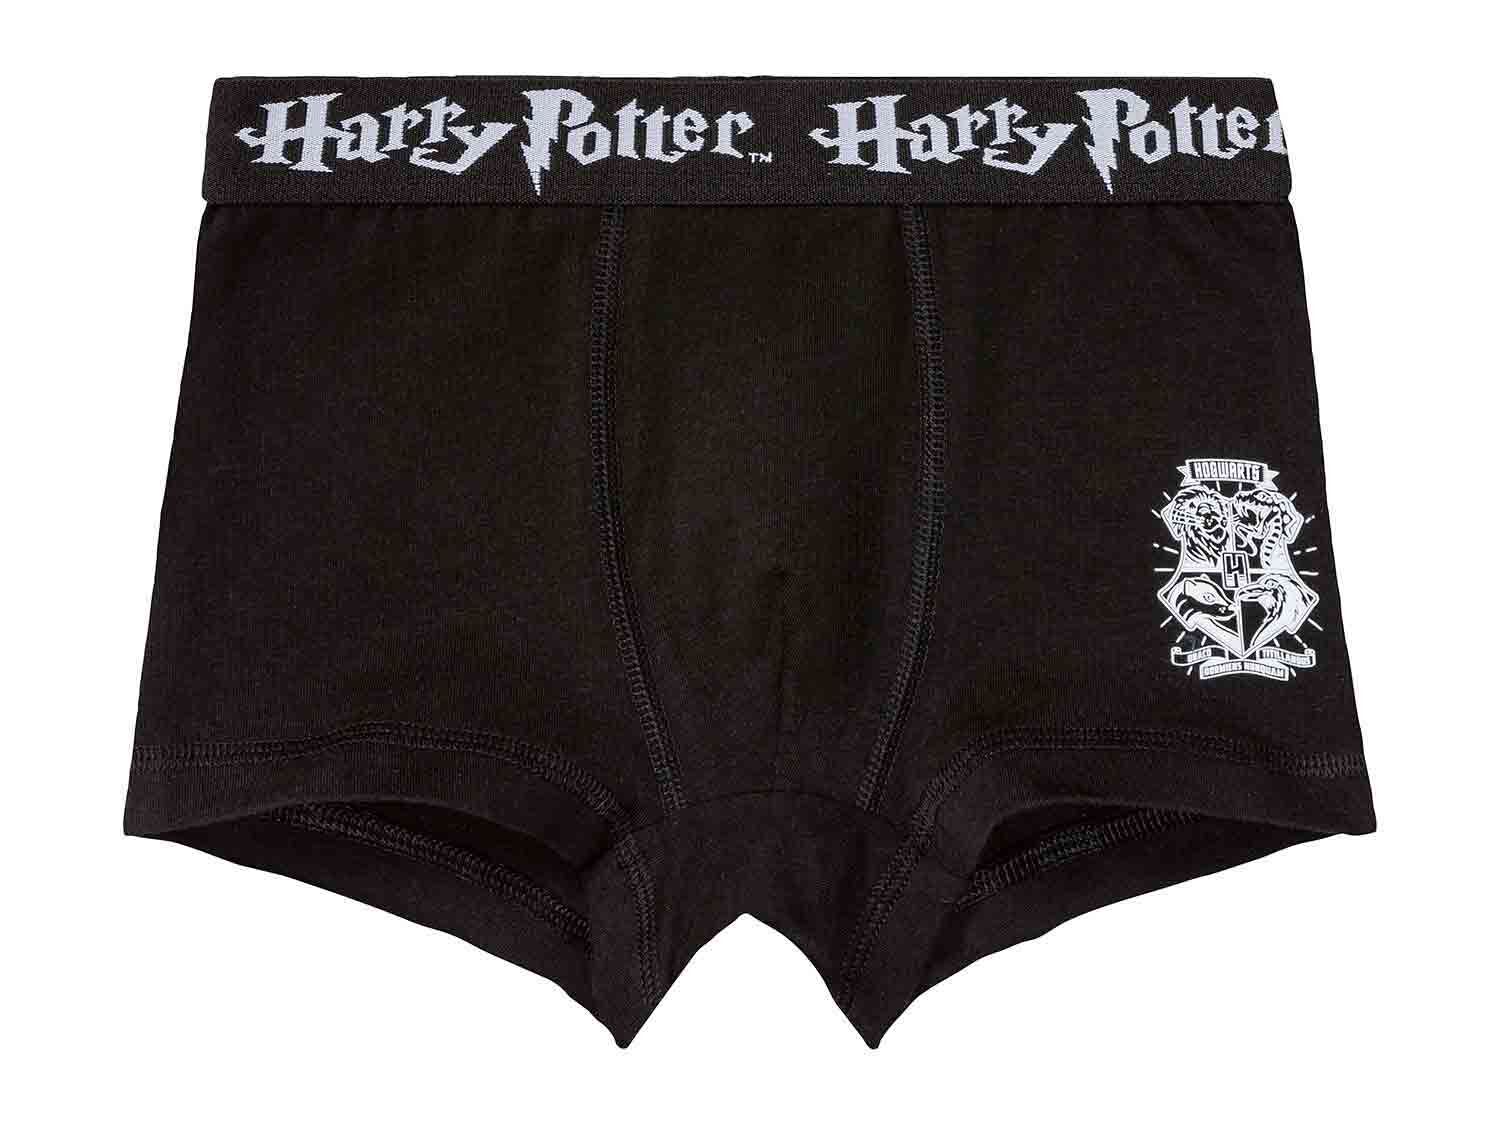 Calzoncillos bóxer júnior Harry Potter pack 2